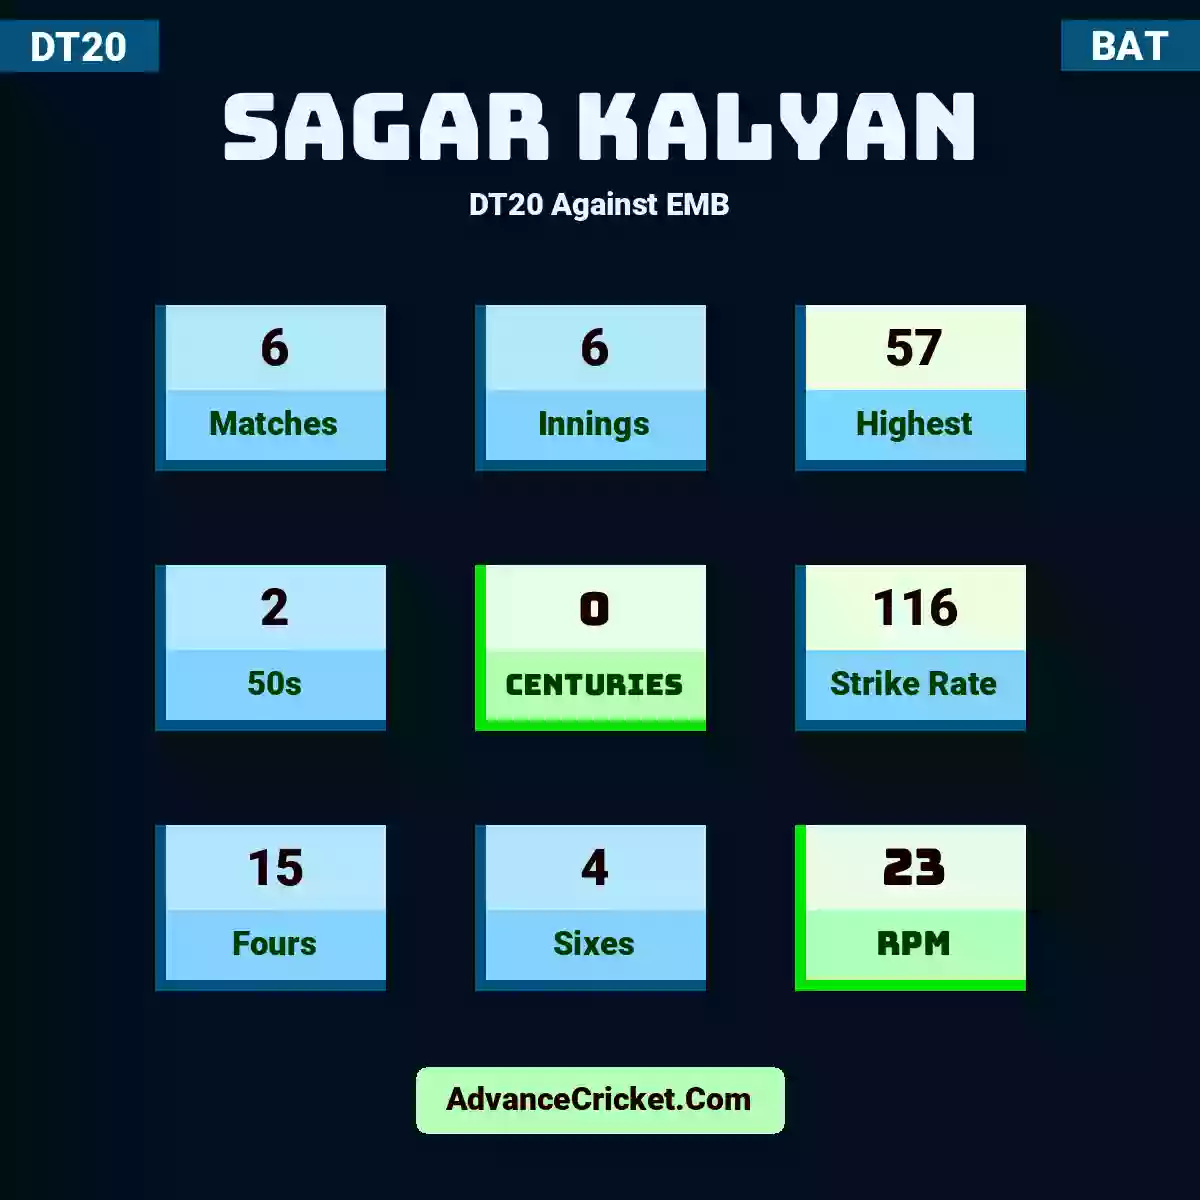 Sagar Kalyan DT20  Against EMB, Sagar Kalyan played 6 matches, scored 57 runs as highest, 2 half-centuries, and 0 centuries, with a strike rate of 116. S.Kalyan hit 15 fours and 4 sixes, with an RPM of 23.